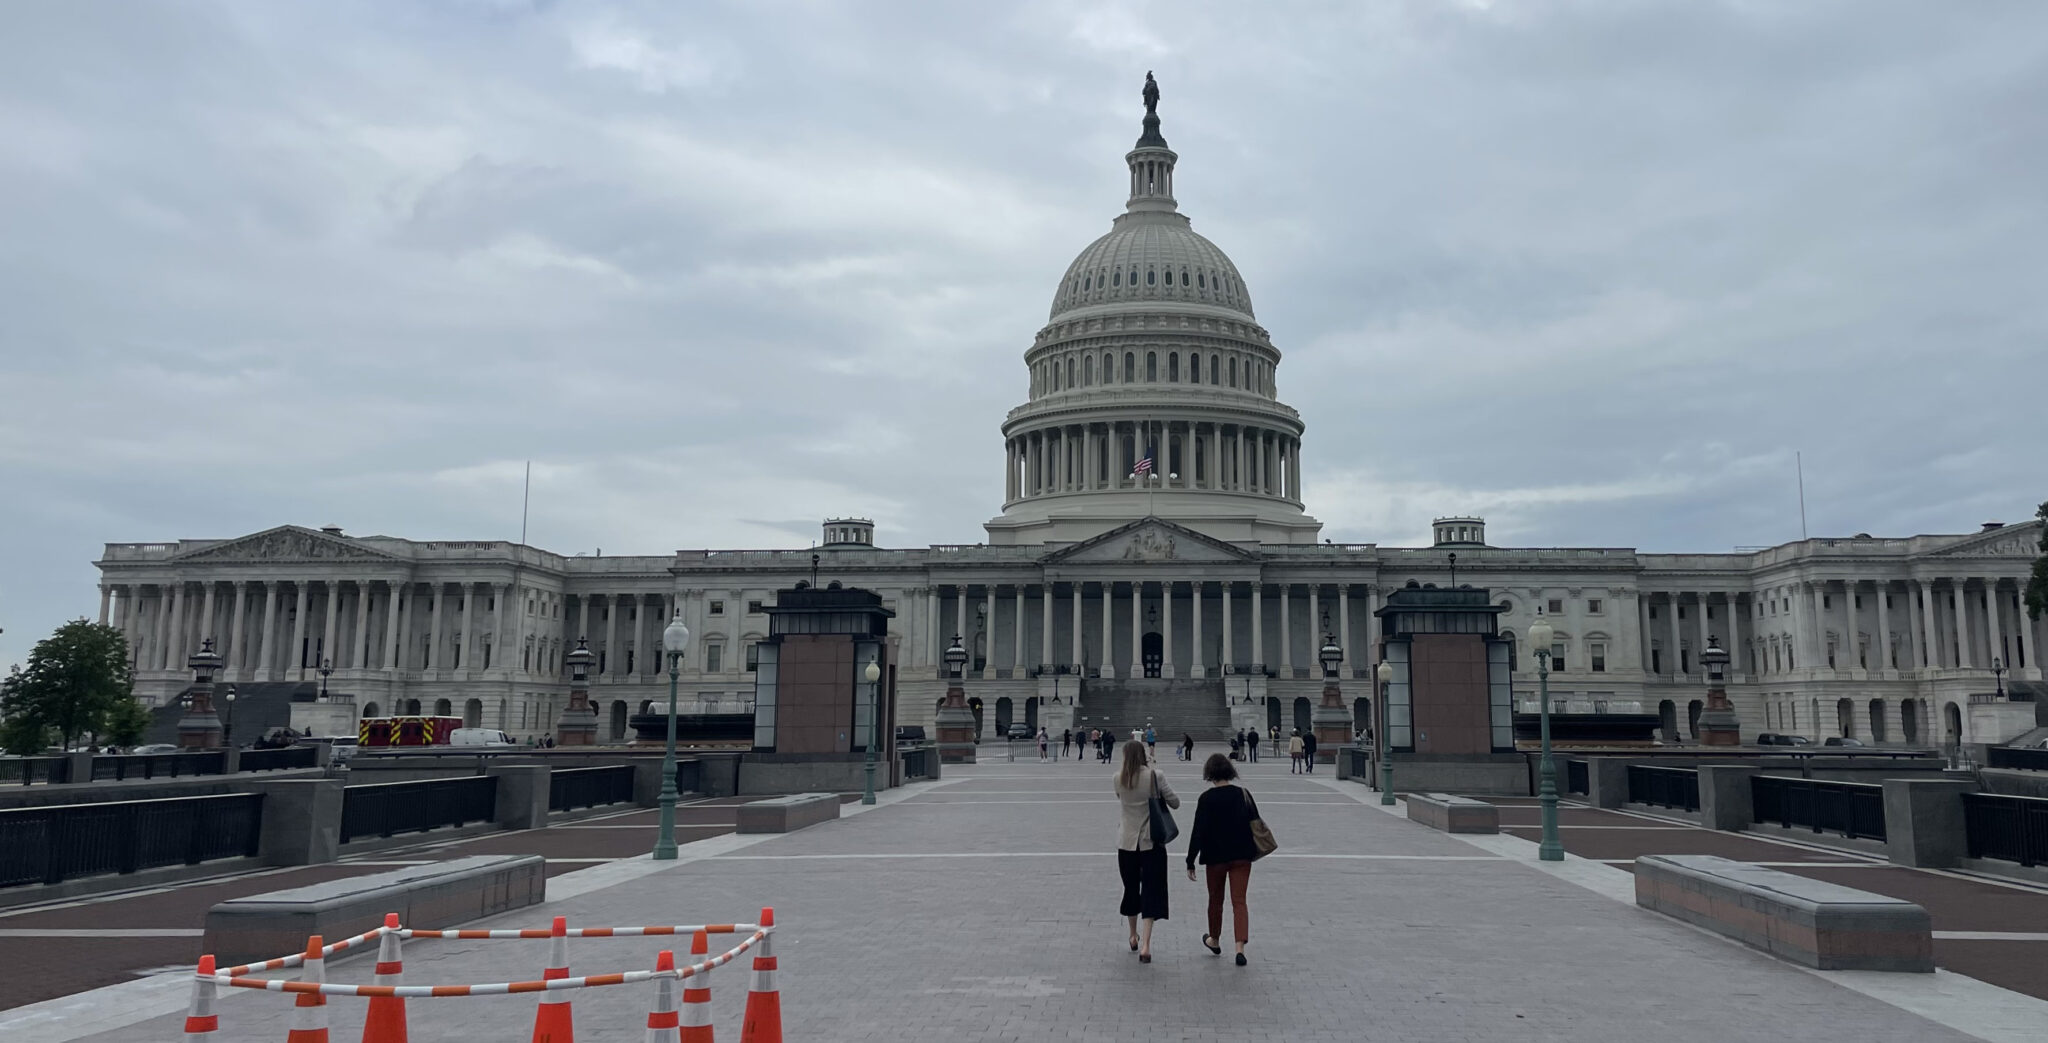 Capitol Building in Washington DC